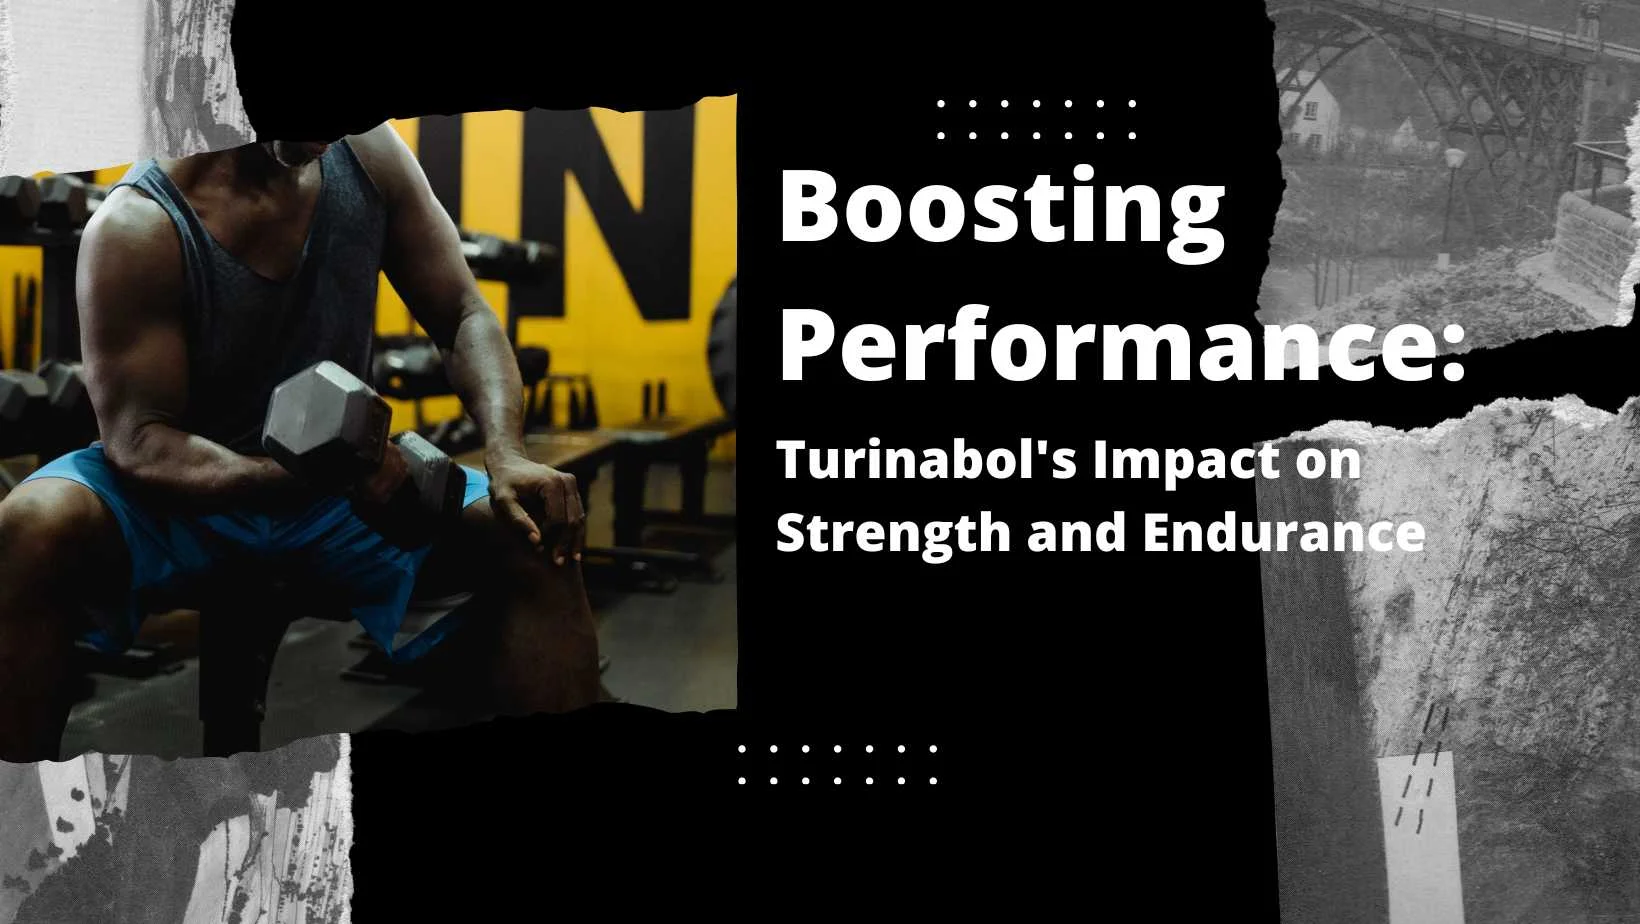 Turinabol's Impact on Strength and Endurance